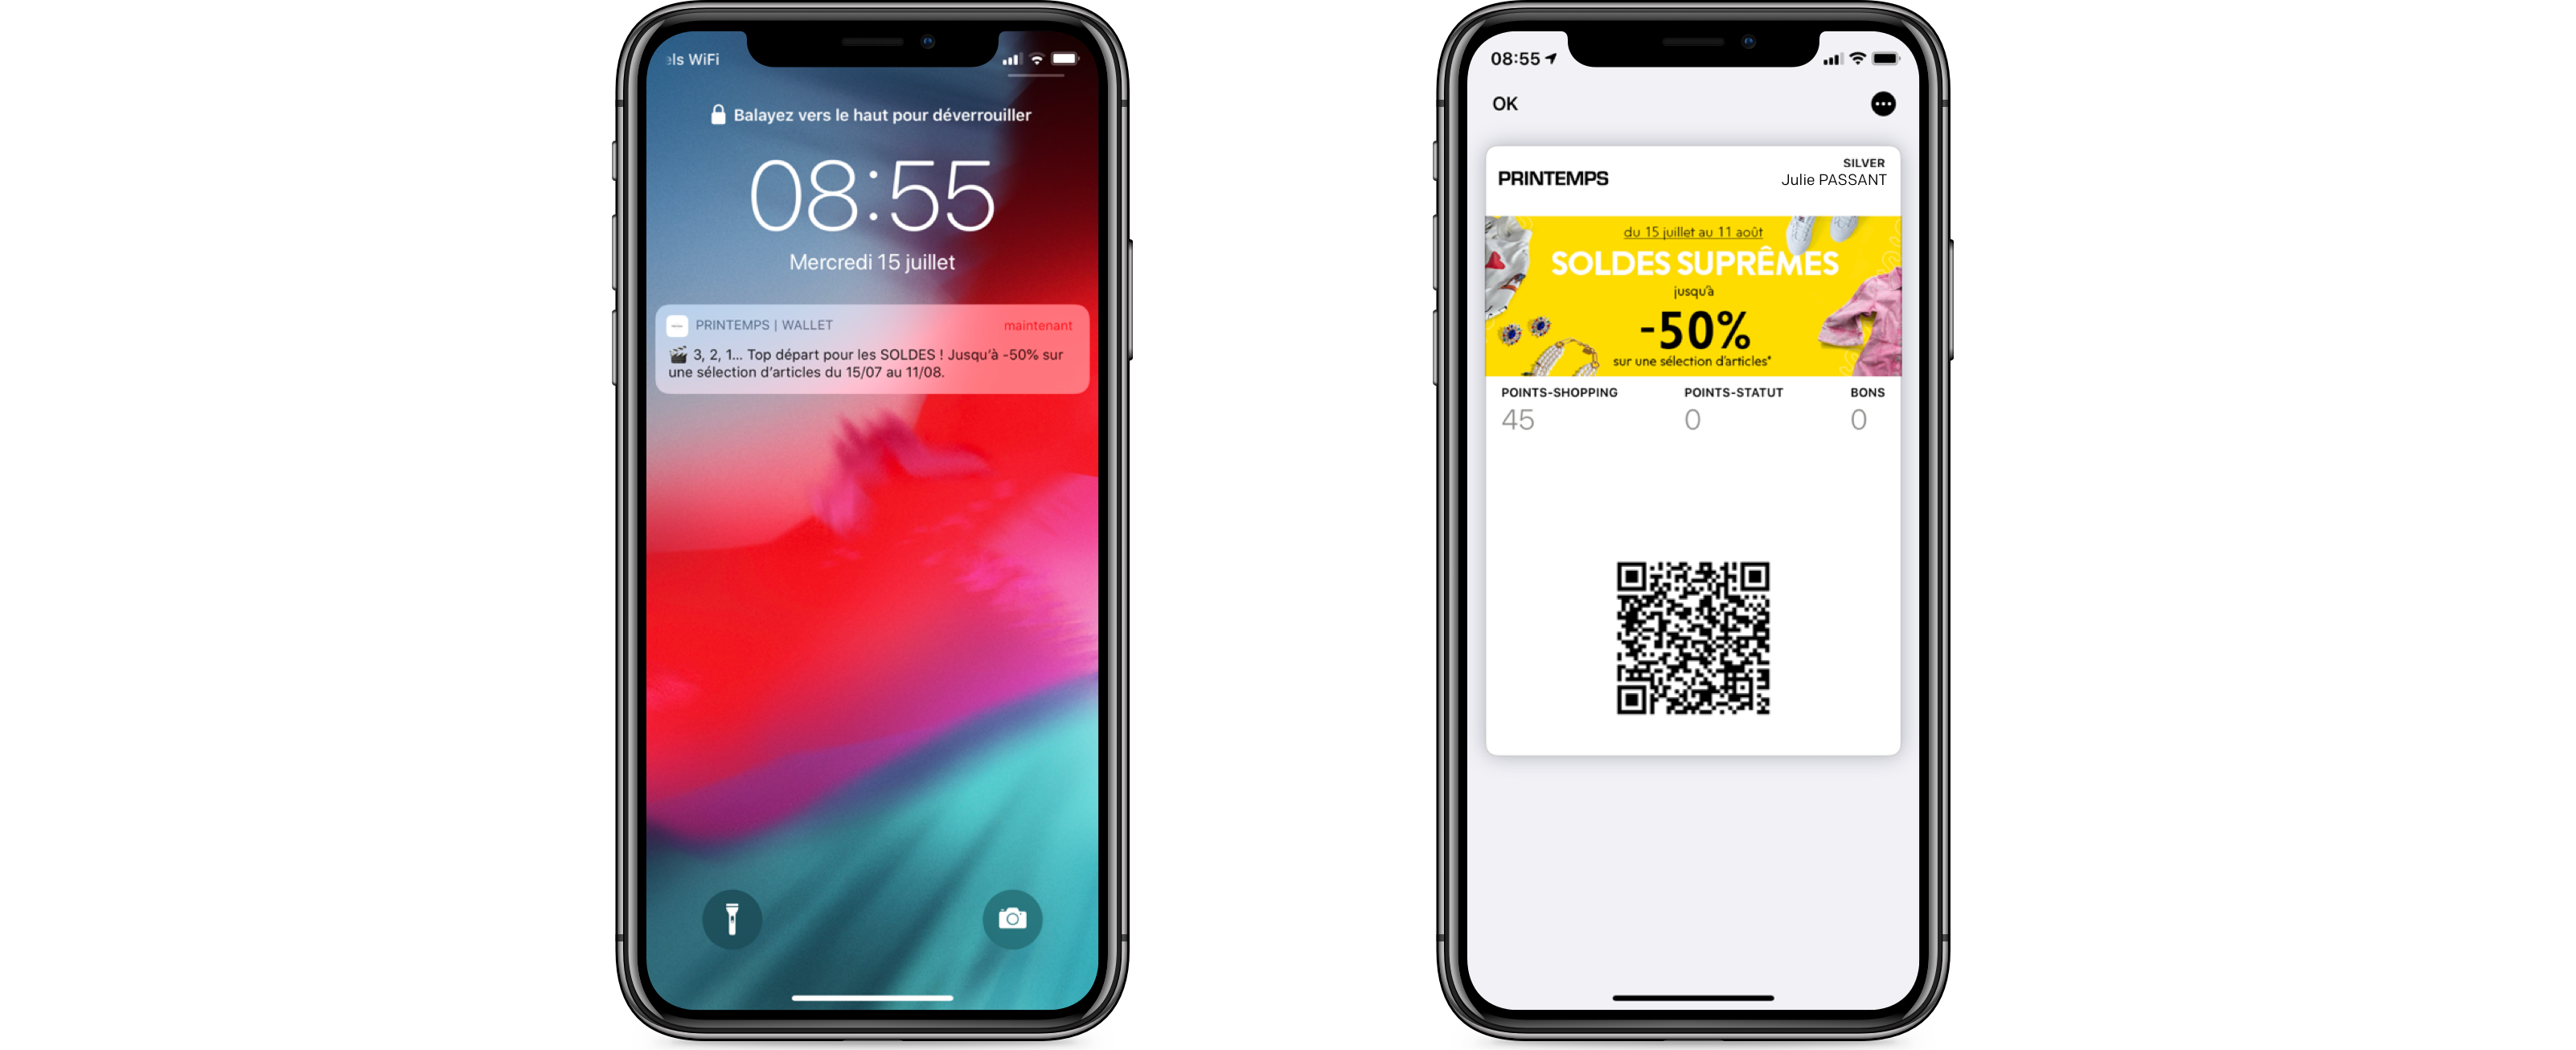 Printemps - Wallet mobile soldes dété 2020